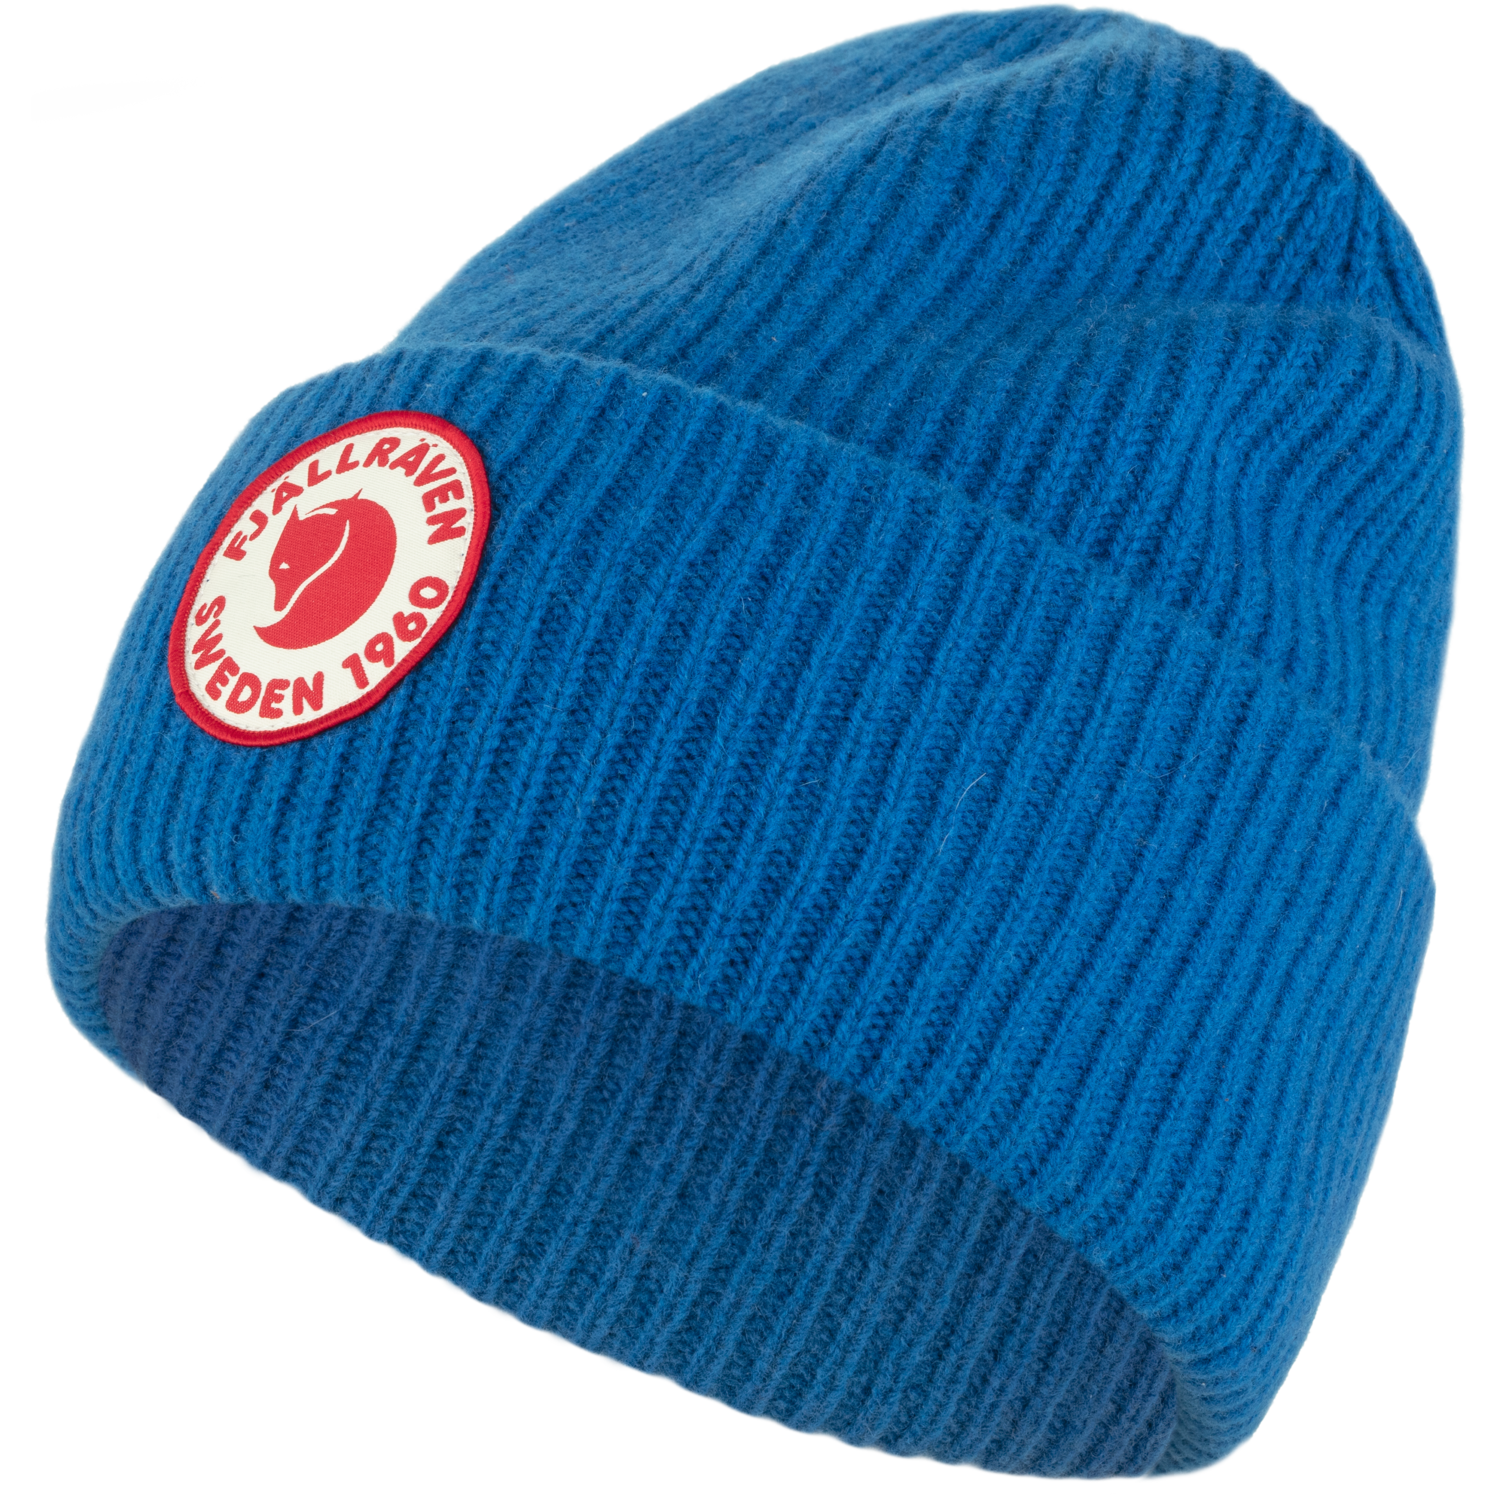 Woolen alpine blue hat or cap with red fox logo and with written fjallraven Sweden 1960 around it.